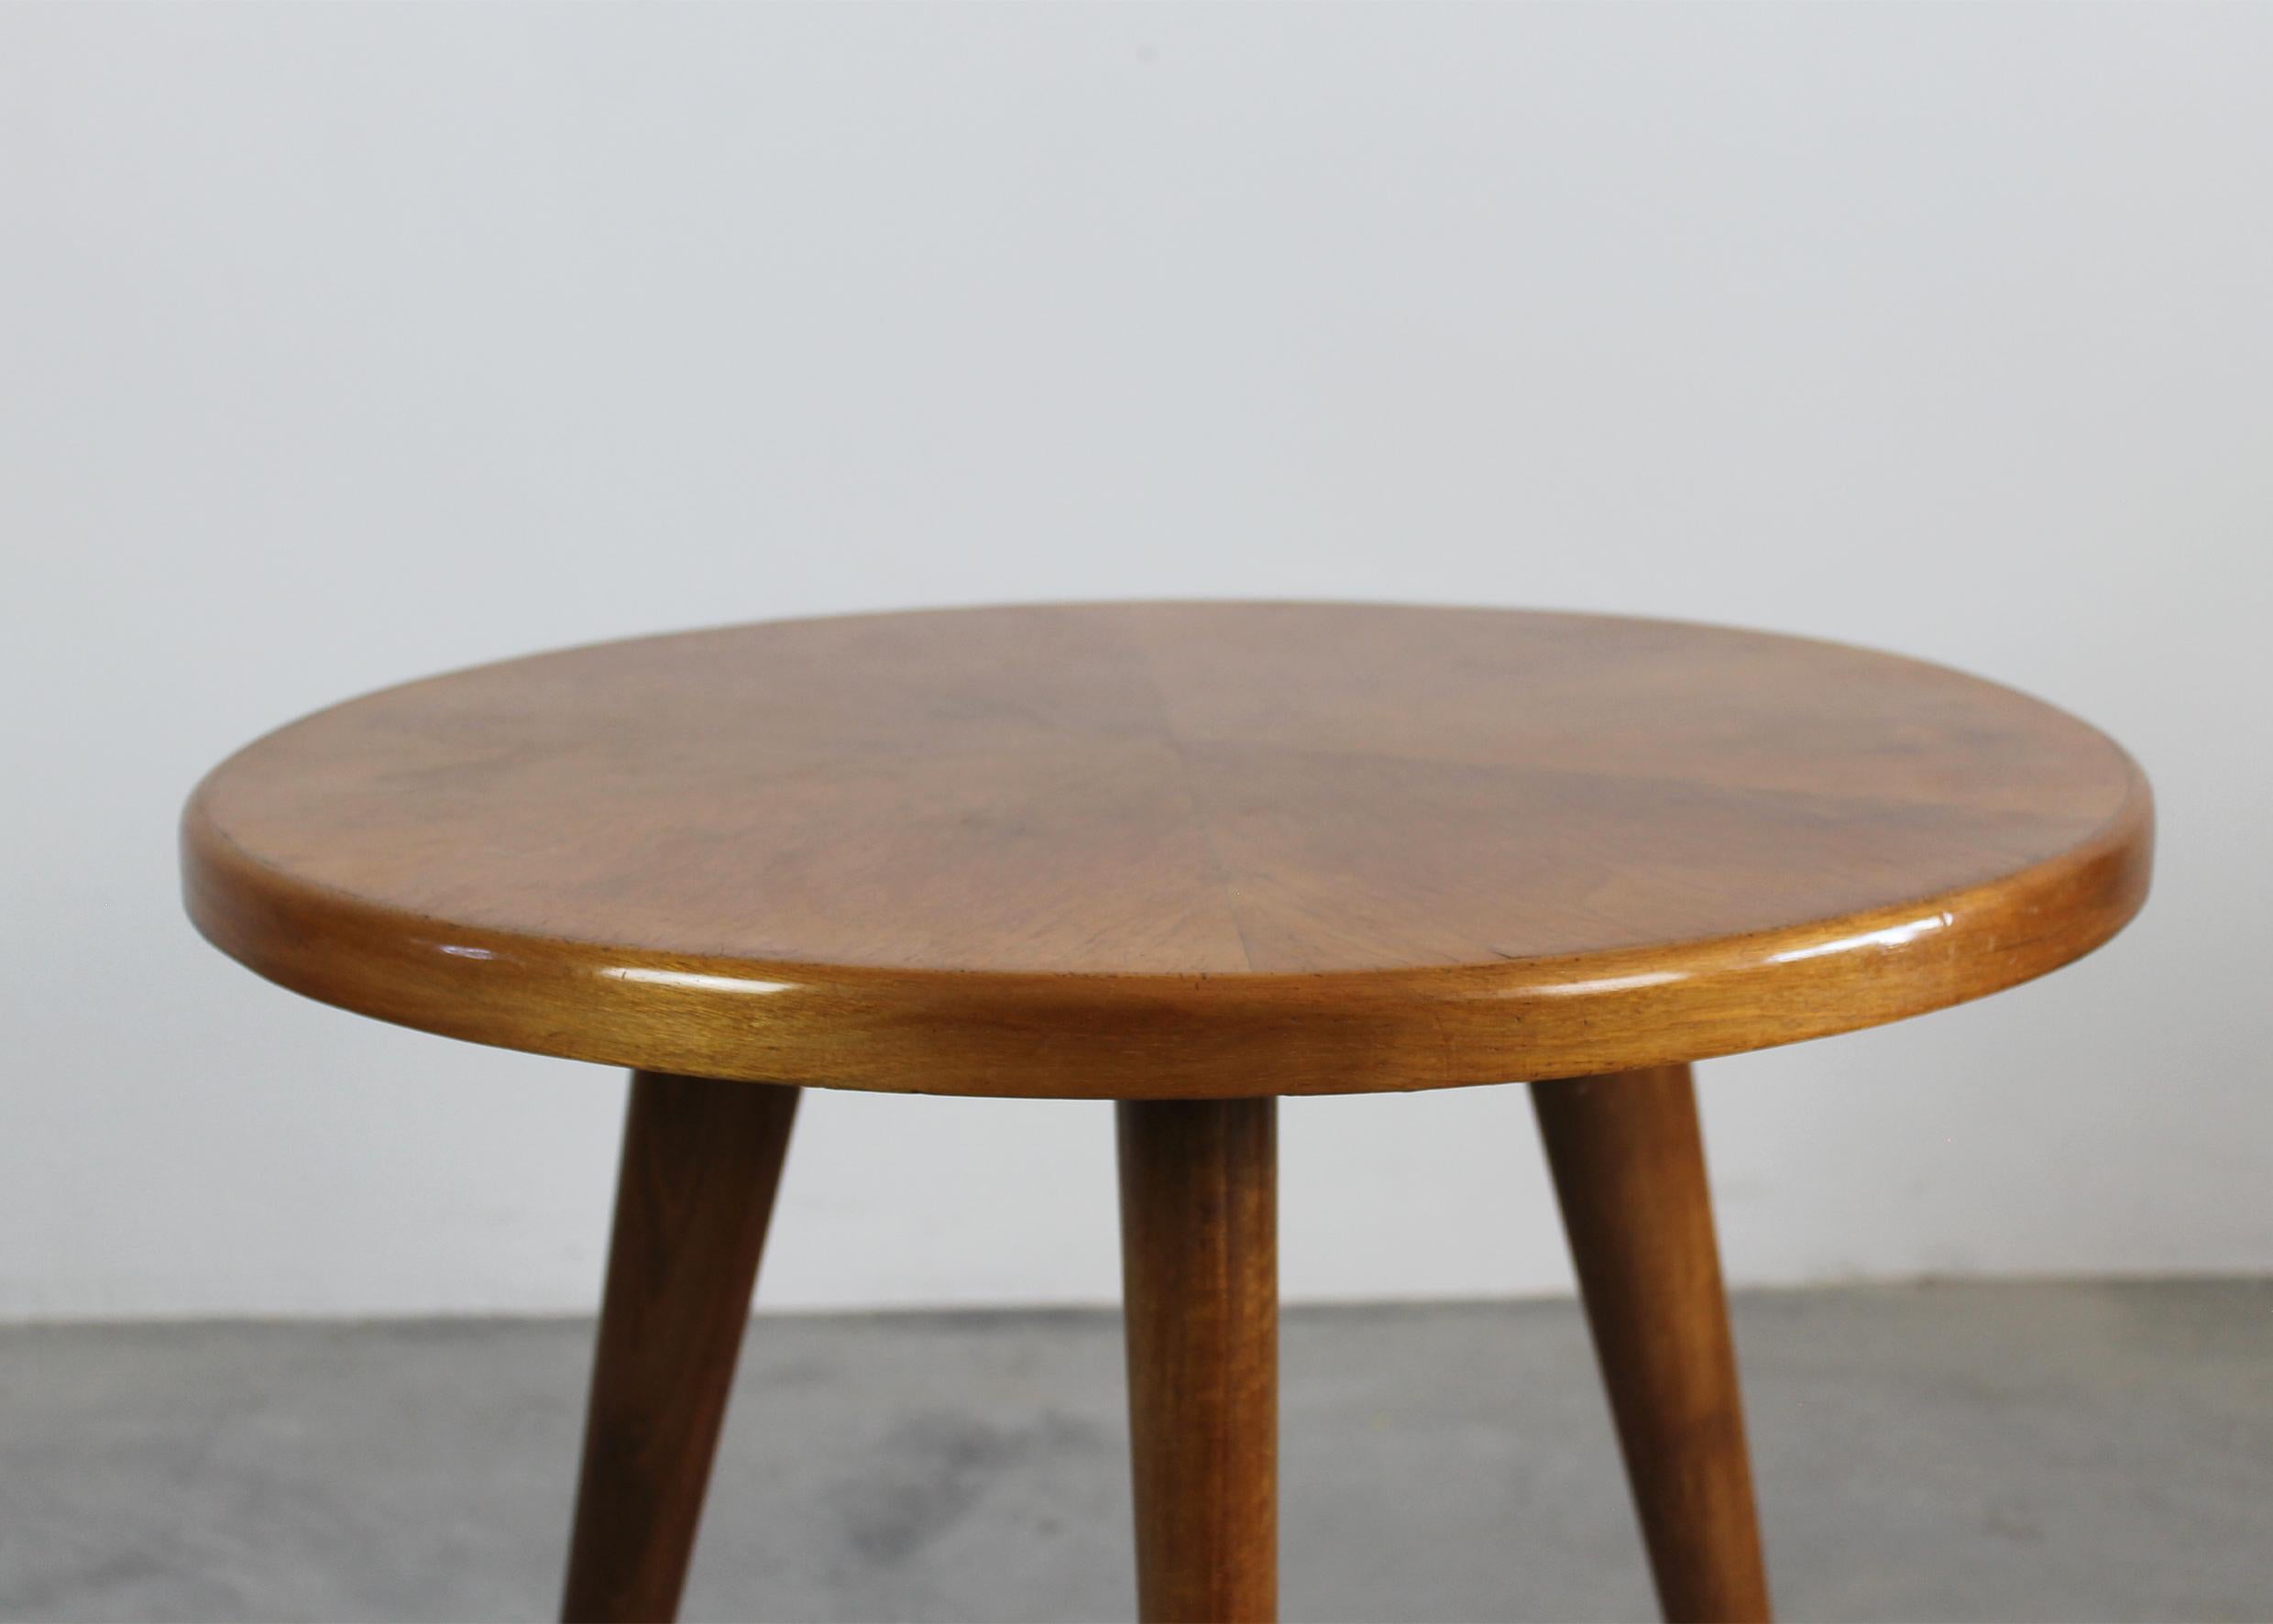 Mid-Century Modern Gio Ponti Round Coffee Table in Walnut Wood Italian Manifacture 1940s For Sale